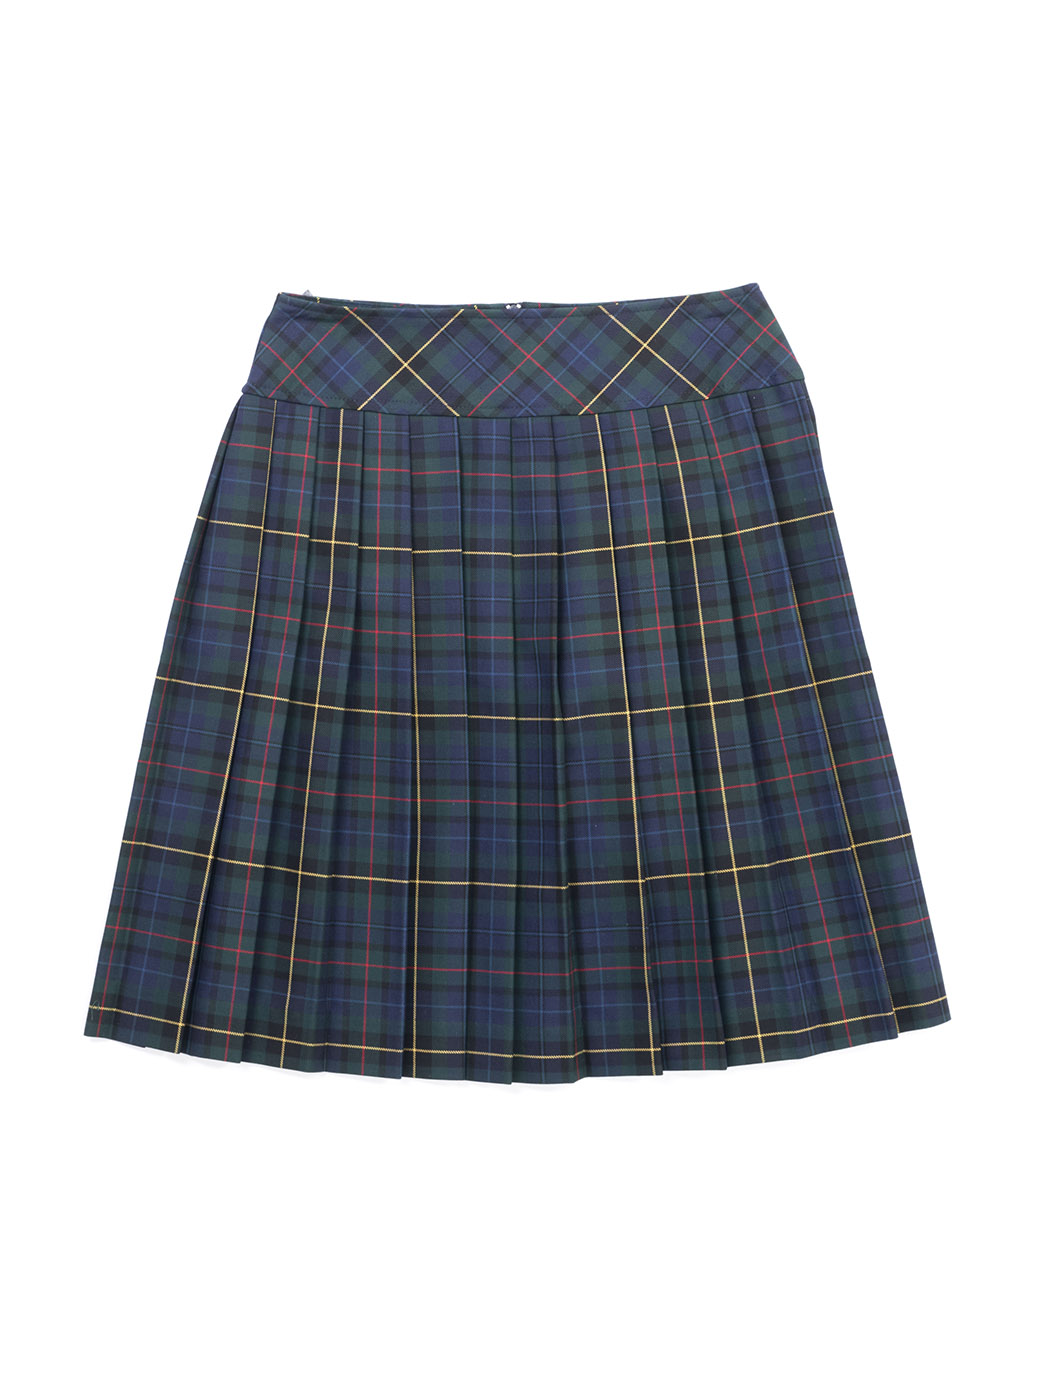 ♥ Plaid skirt